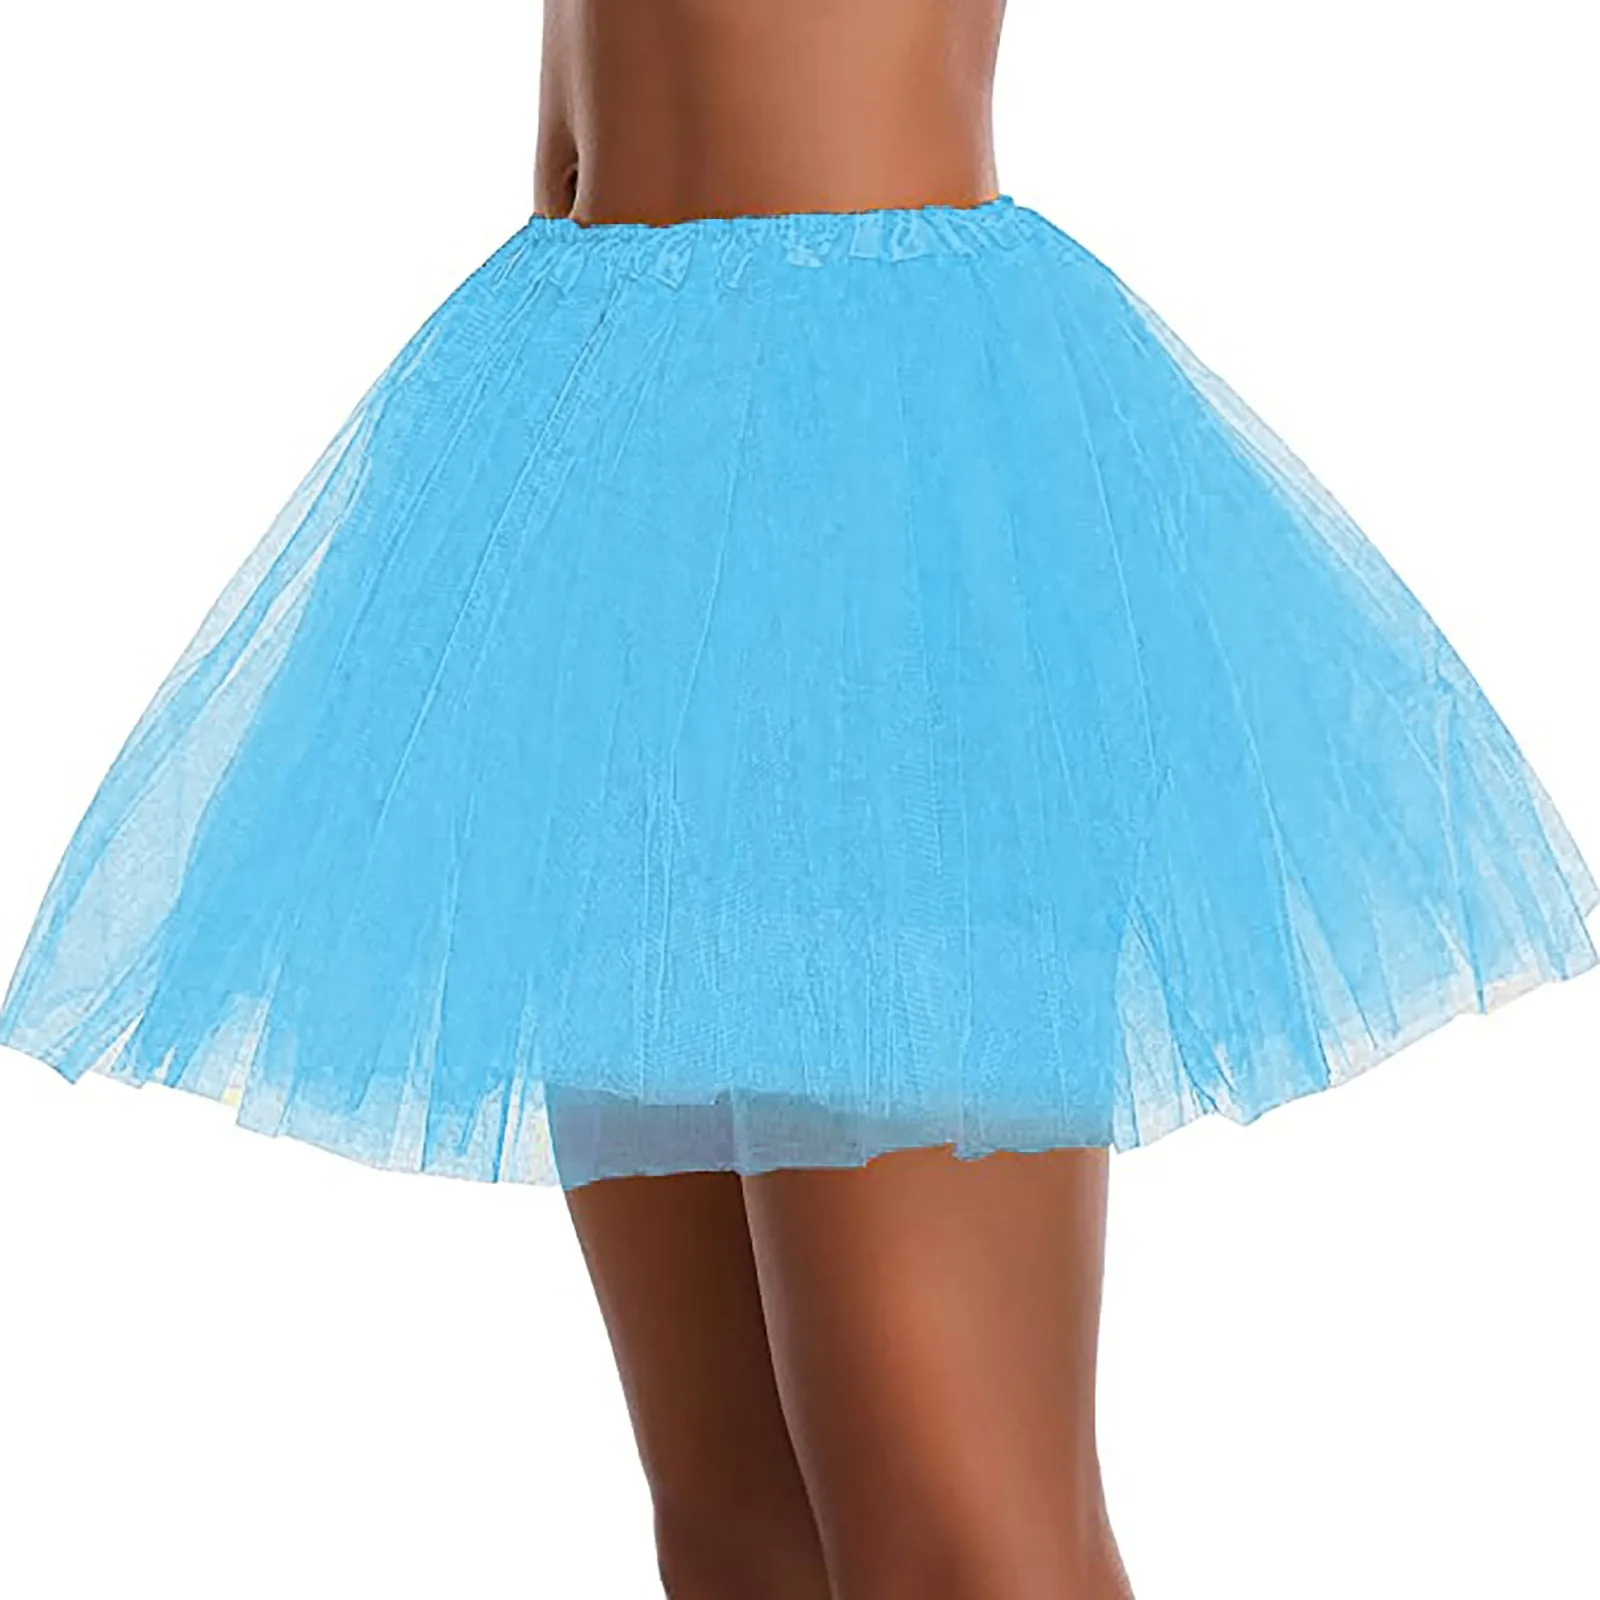 

Fringe Skirt Womens Pleated Short Skirt Adult Tutu Dancing Skirt 3 Layered Ruched Pencil Skirt High Waist